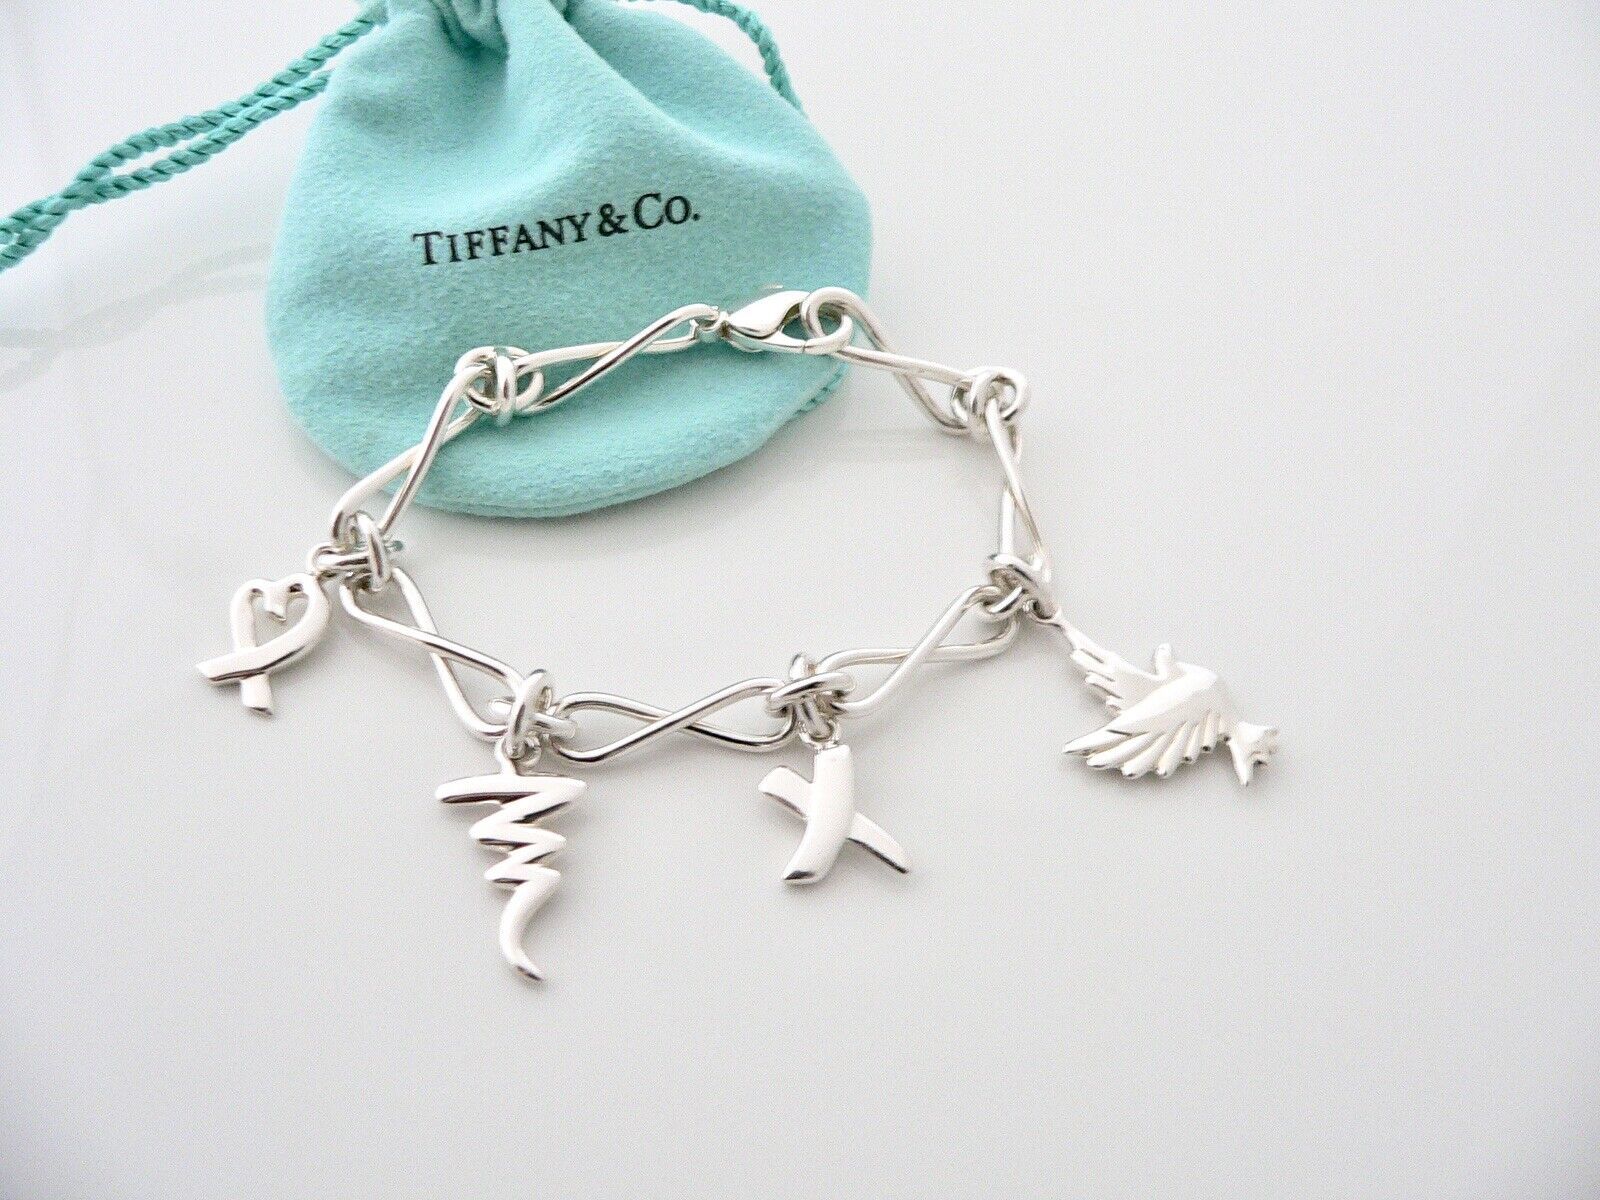 Tiffany & Co Charm Bracelet Heart Dove Kiss Scribble Bangle Jewelry Gift Pouch - $498.00